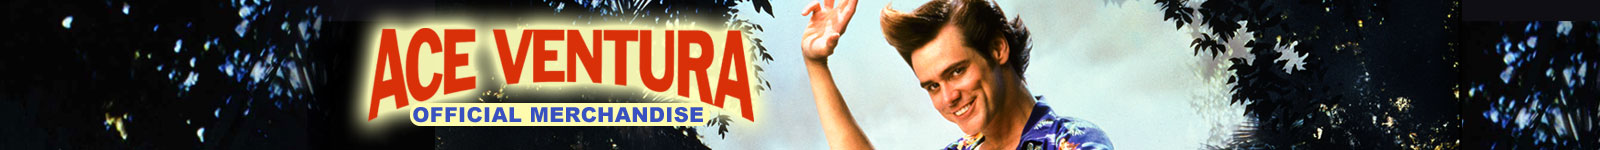 Ace Ventura banner